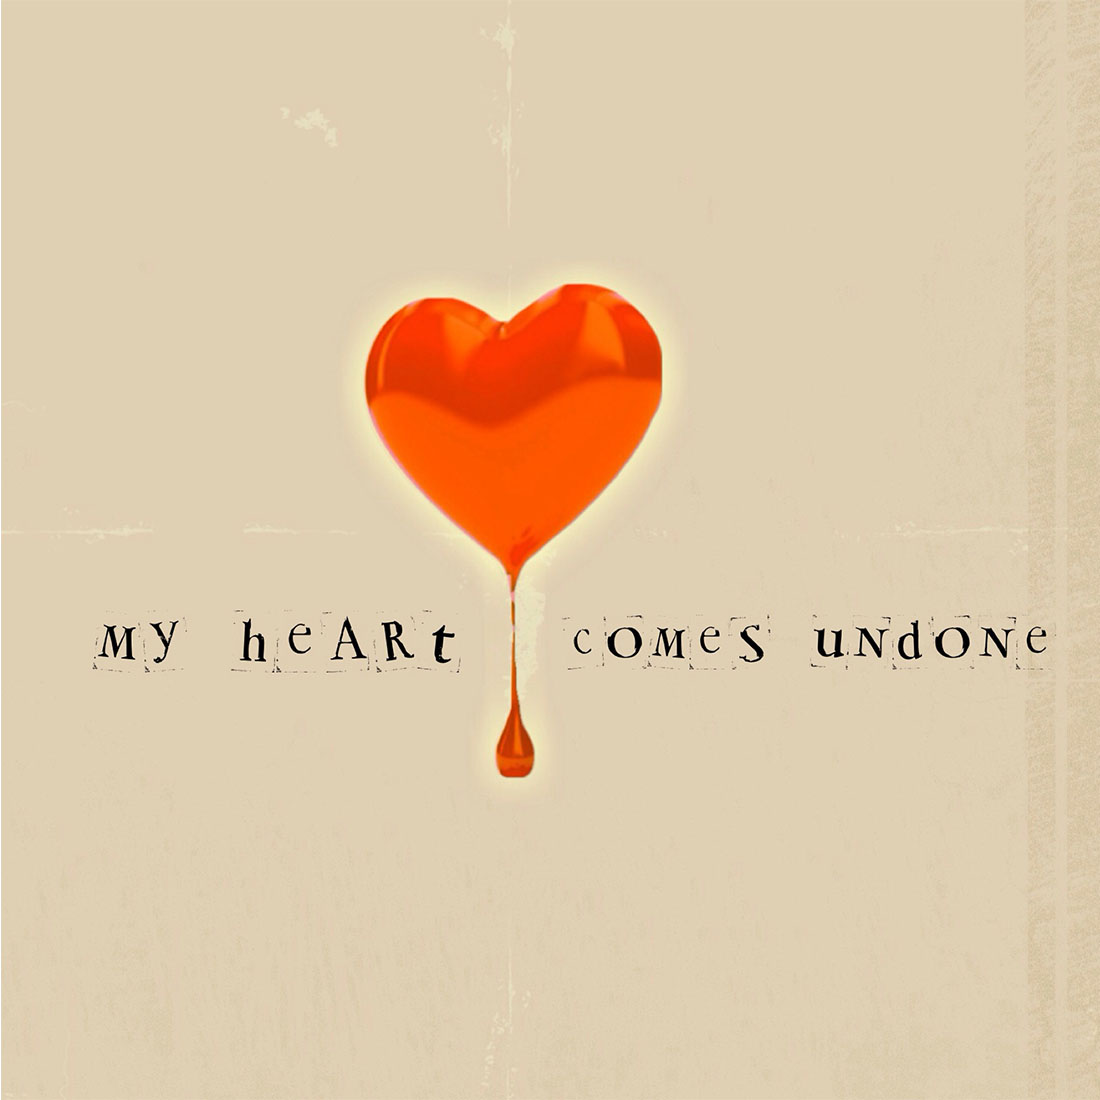 my heart comes undone cover art.jpg